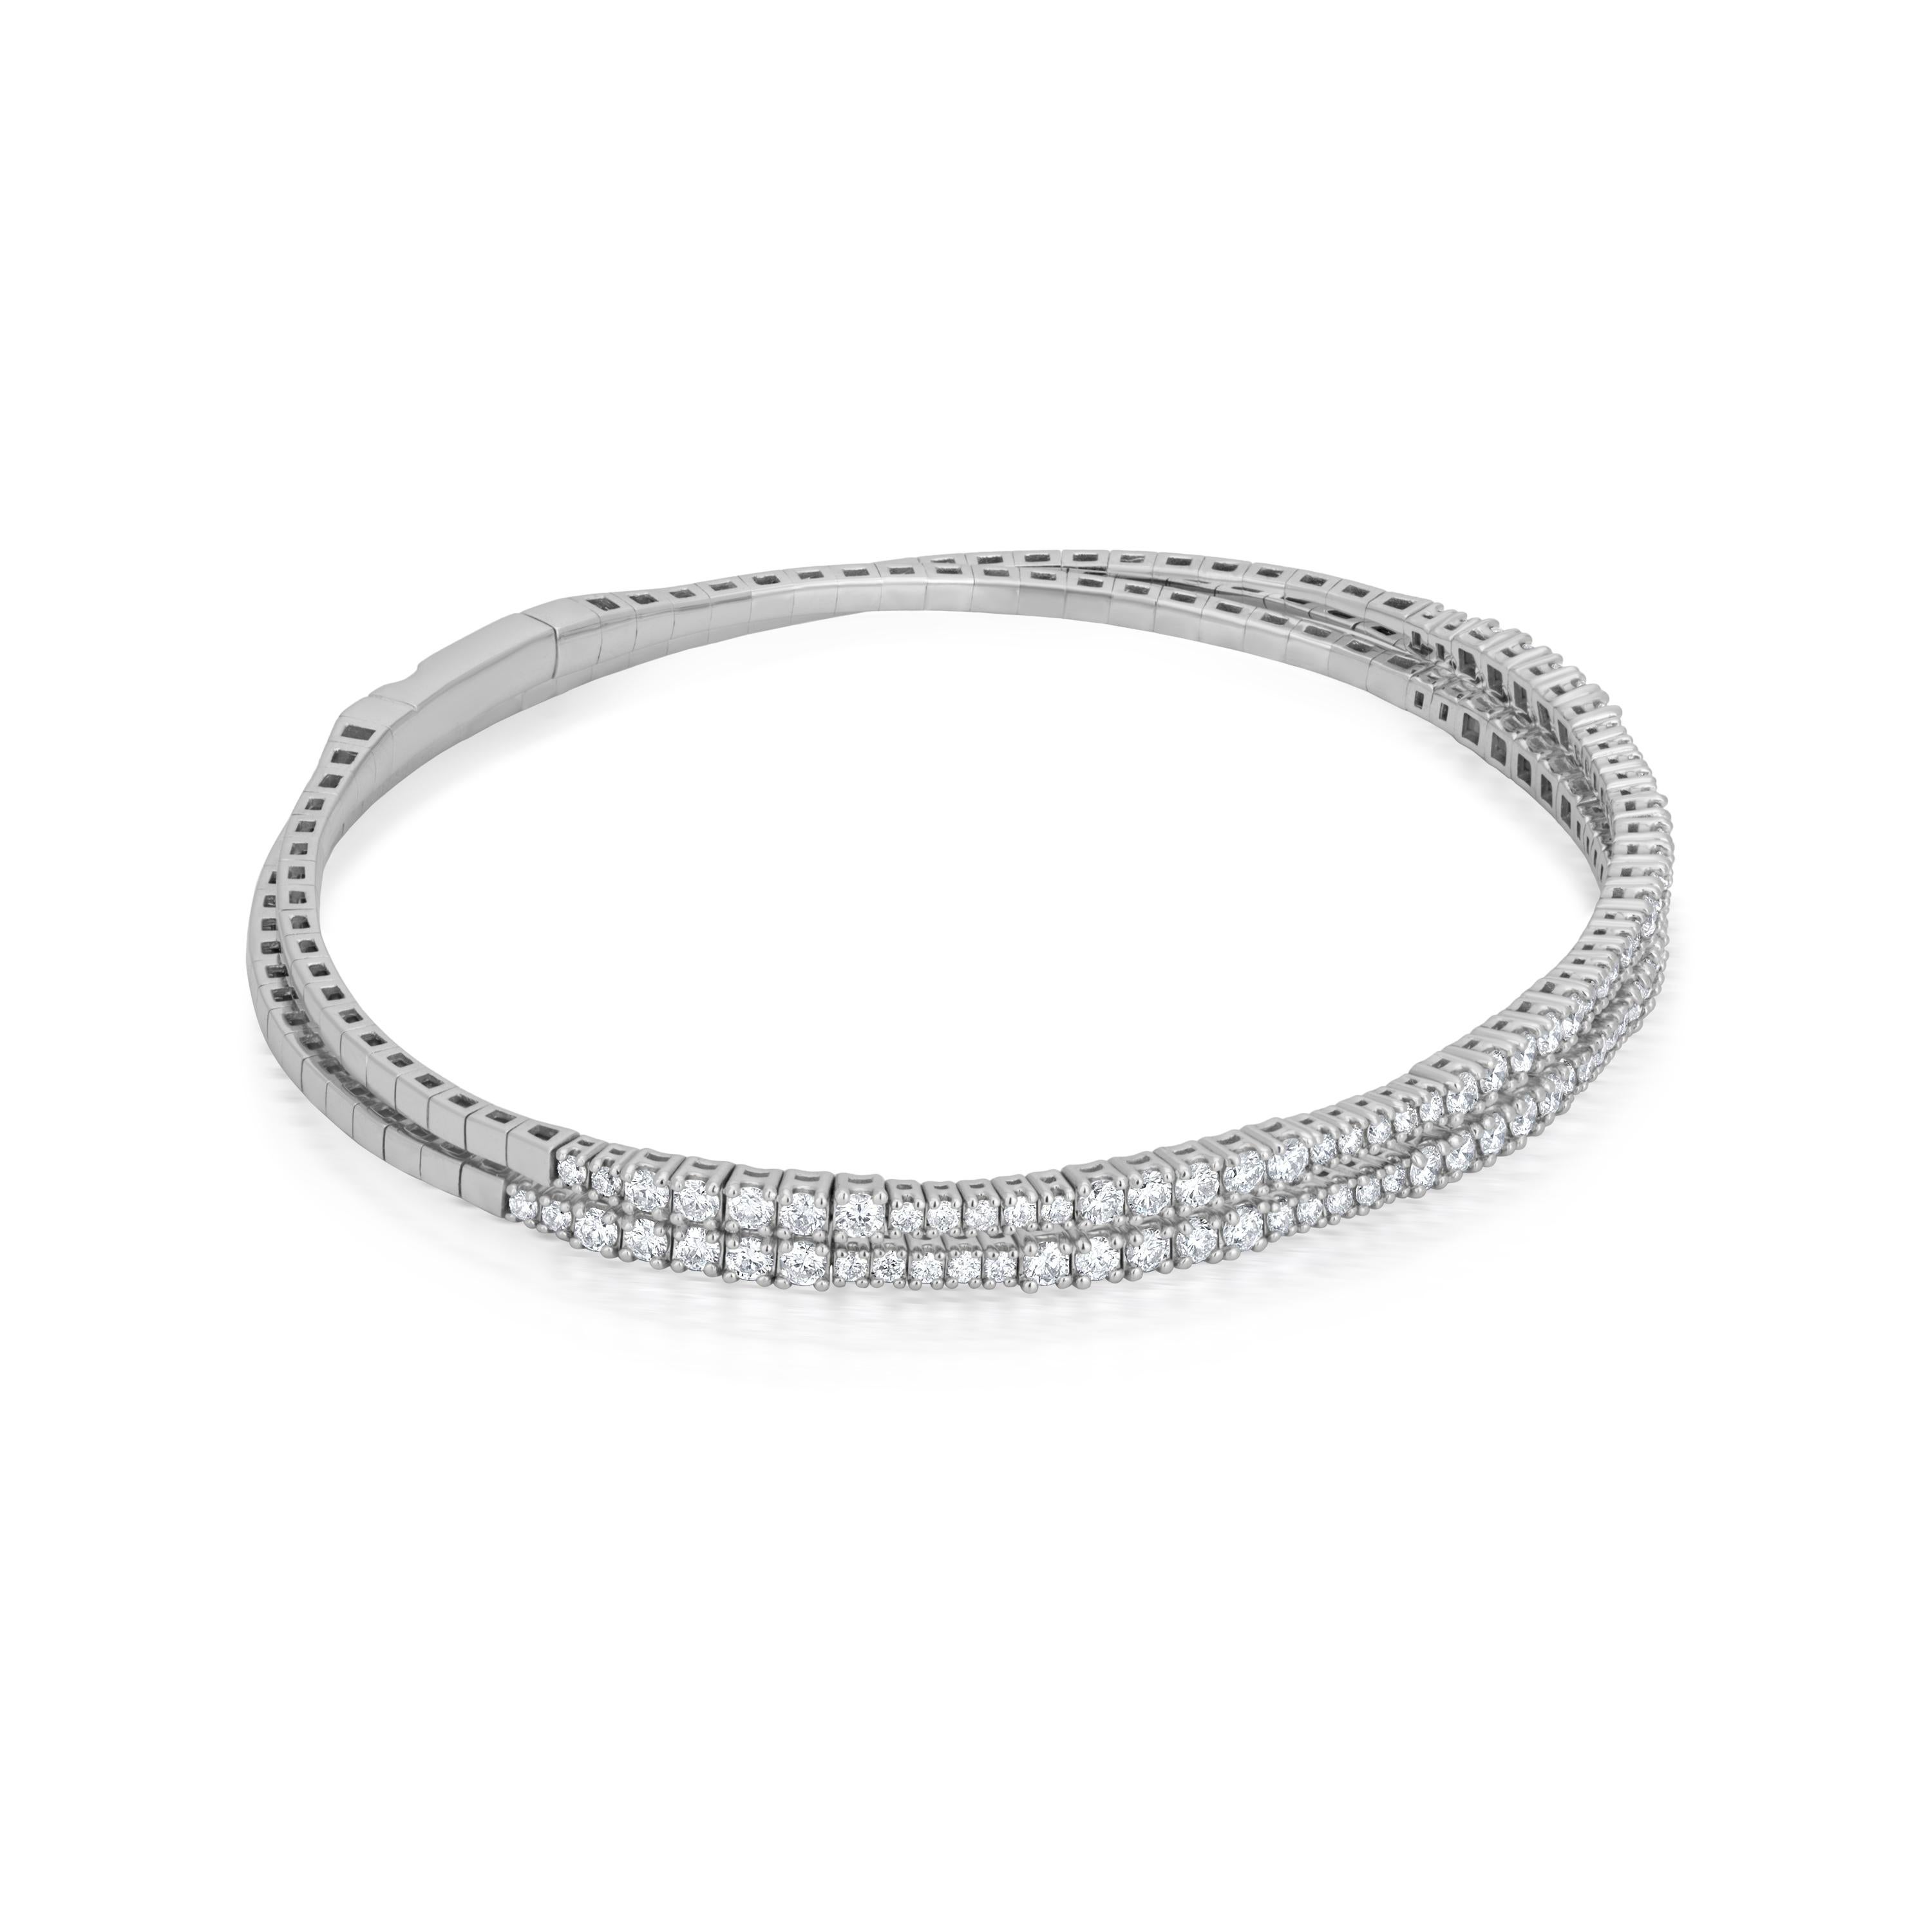 Round Cut Luxle 1.81cttw. Diamond Bangle Bracelet in 18k White Gold For Sale